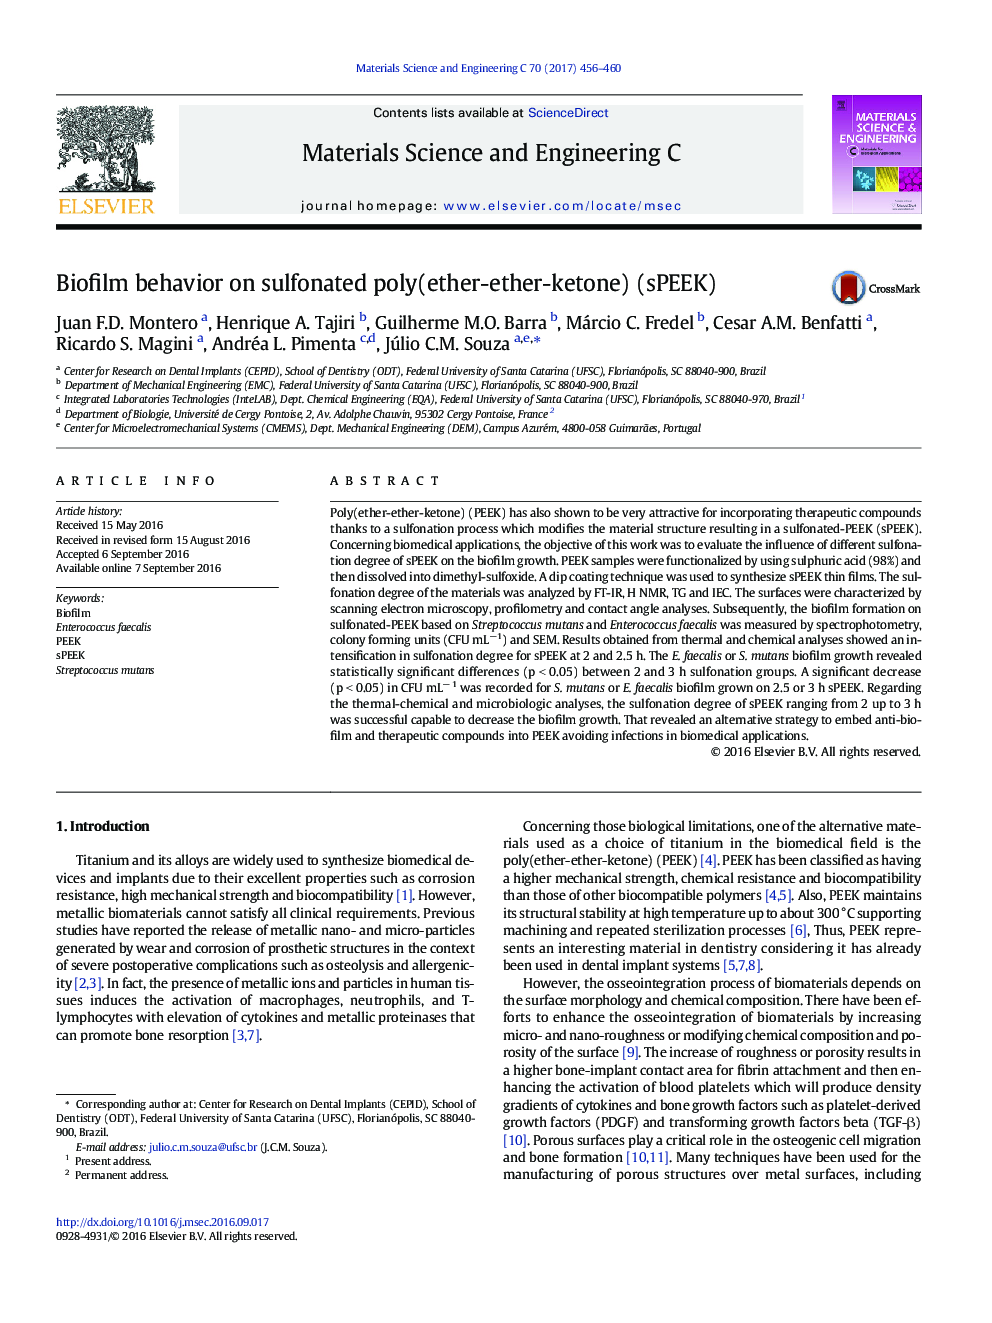 Biofilm behavior on sulfonated poly(ether-ether-ketone) (sPEEK)